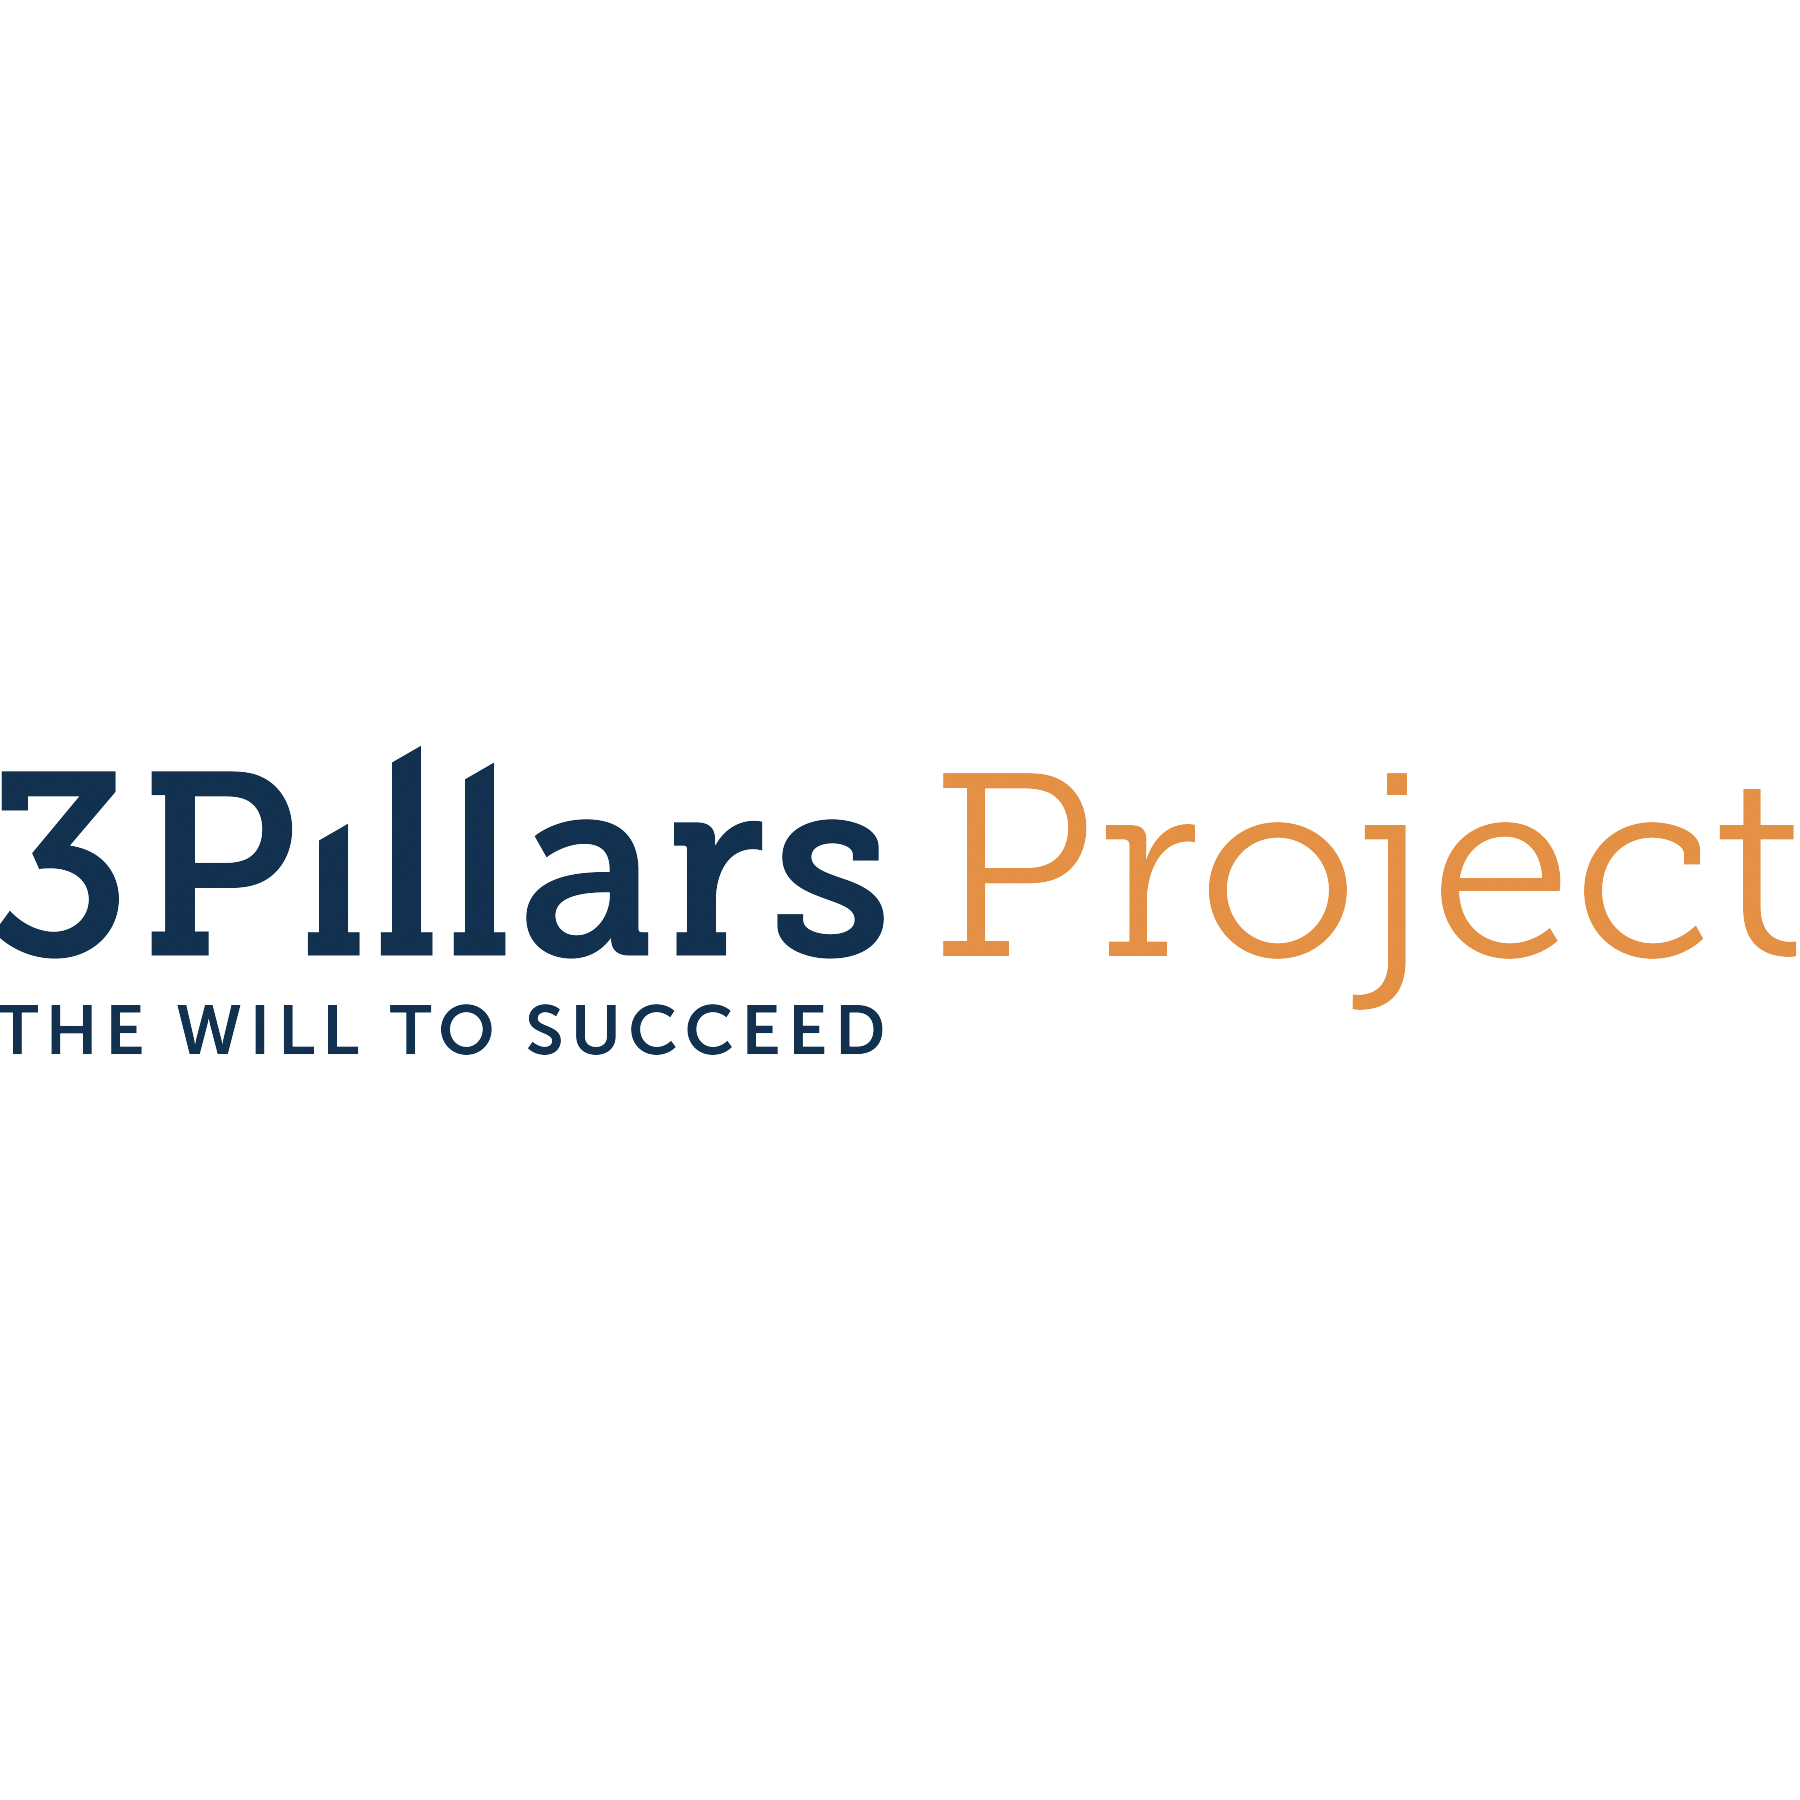 3 Pillars Project